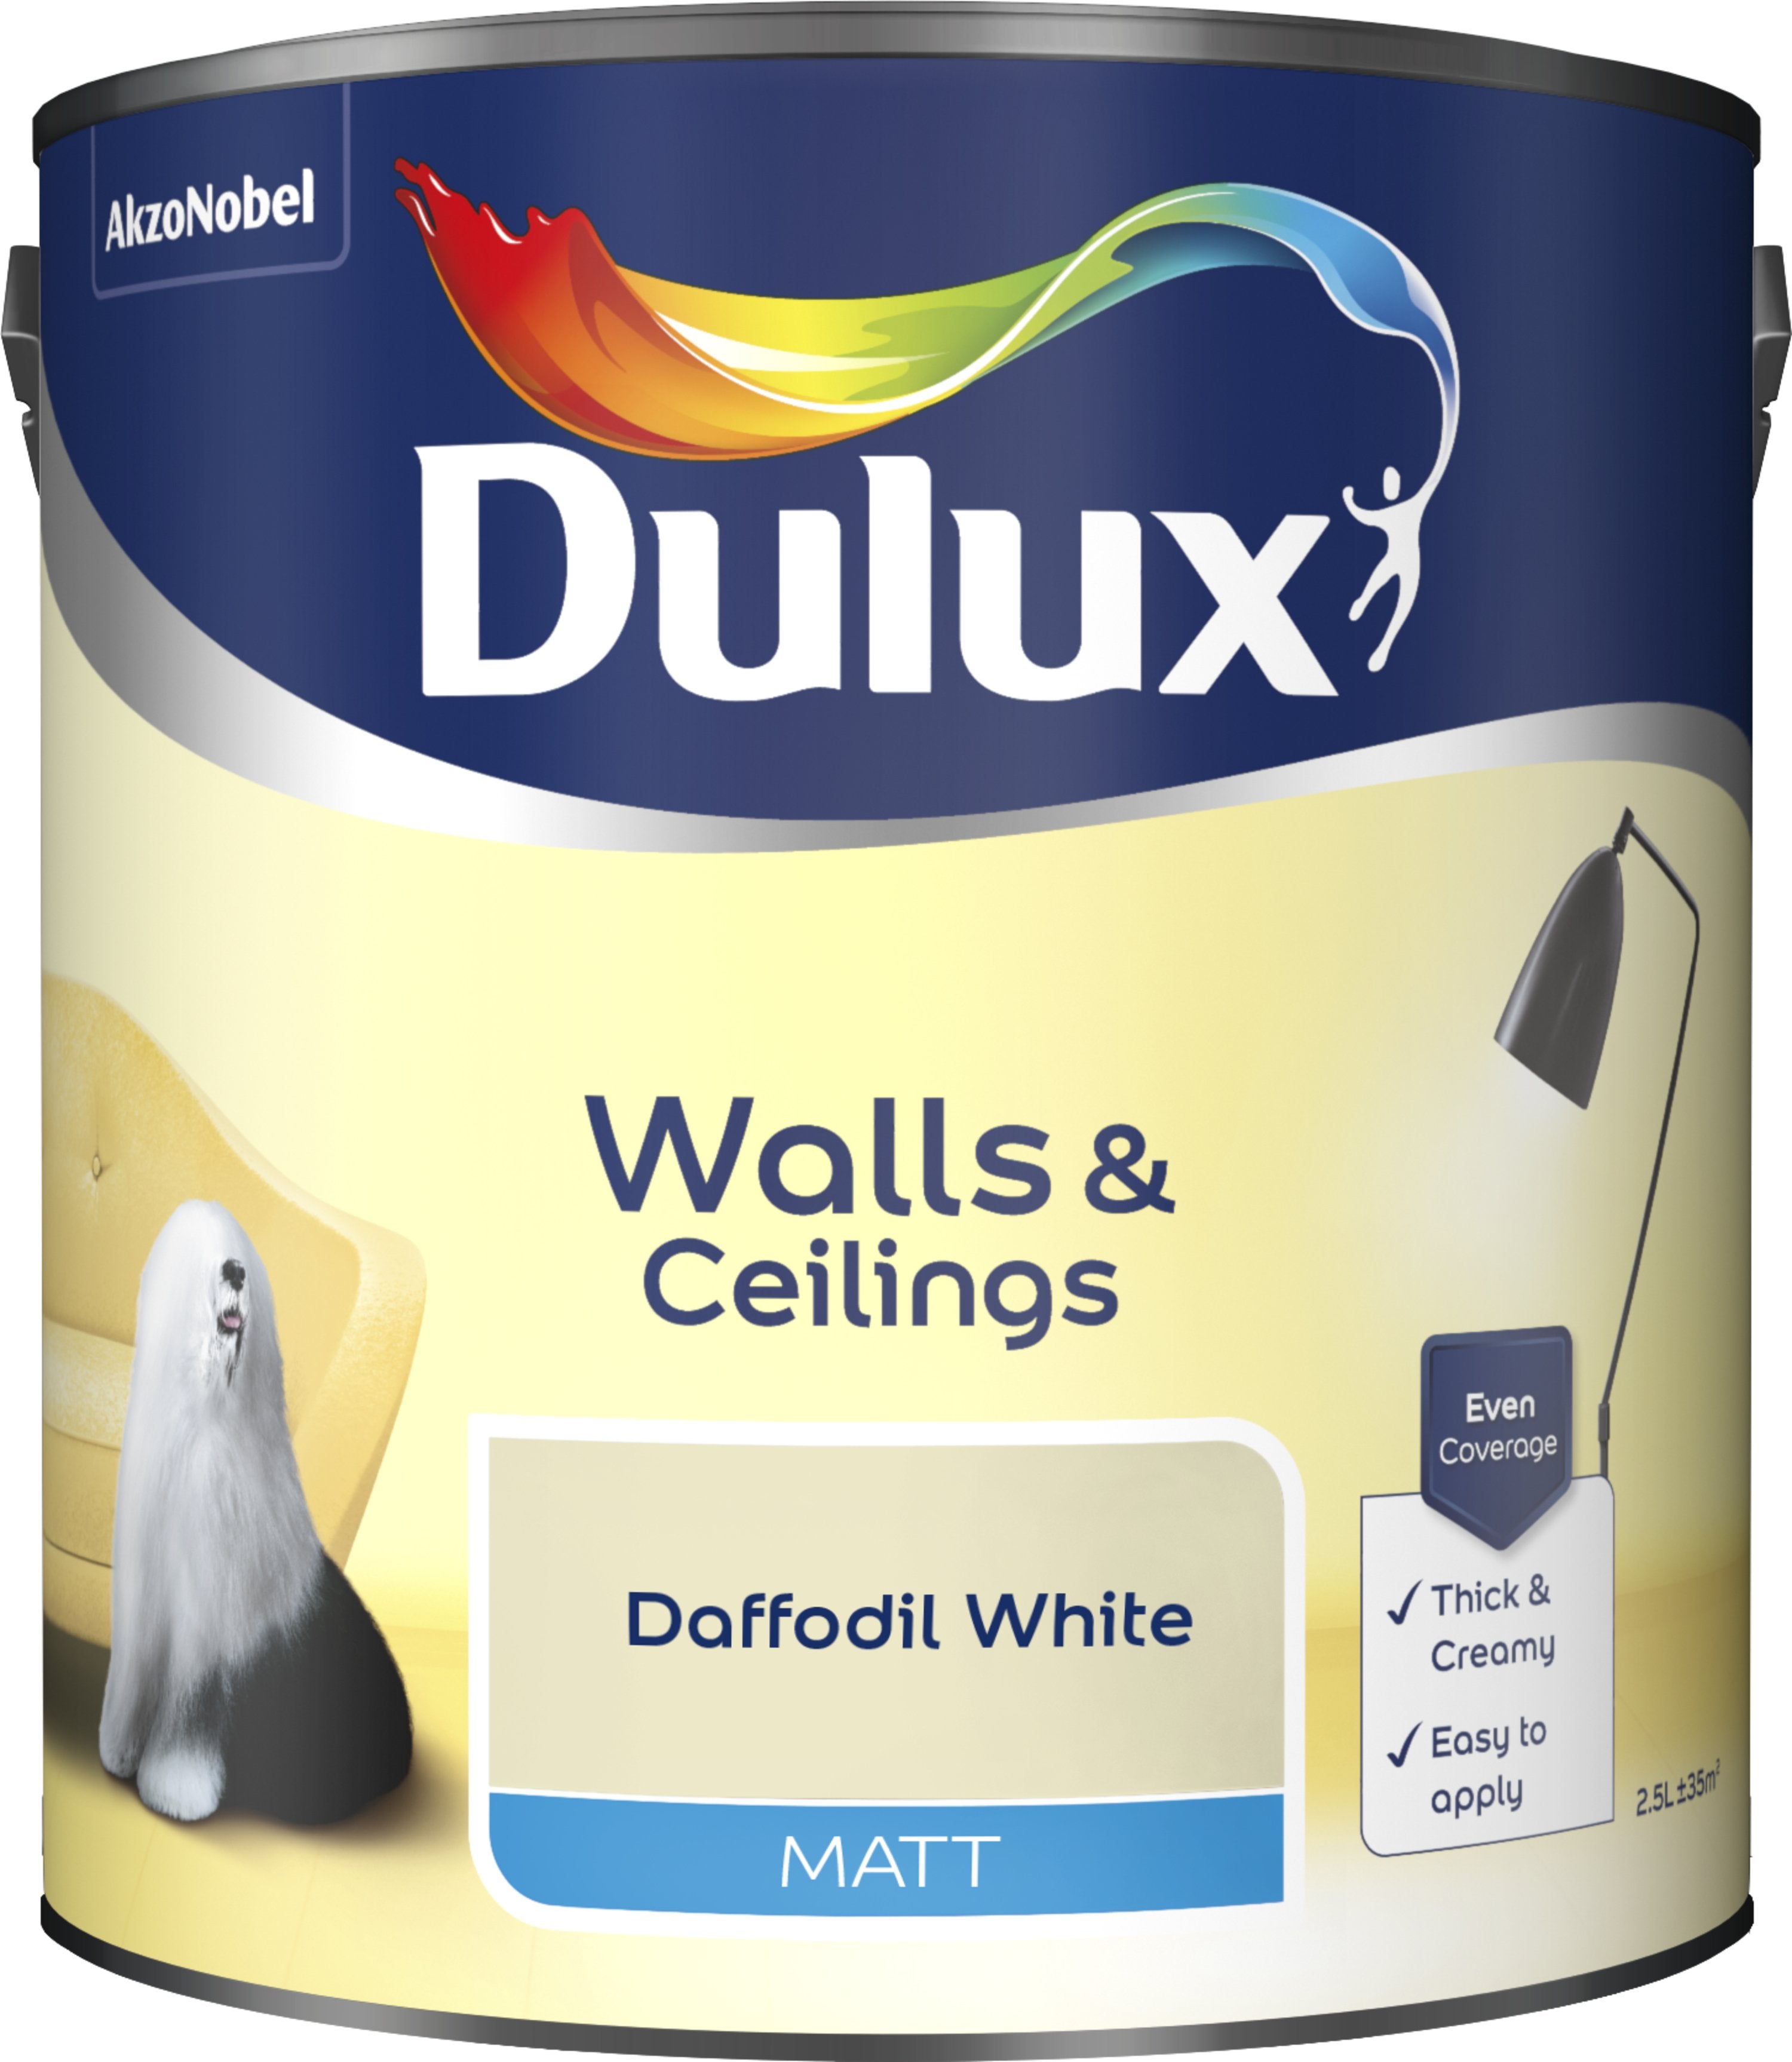 Dulux Matt Emulsion Paint For Walls And Ceilings - Daffodil White 2.5L Garden & Diy Home